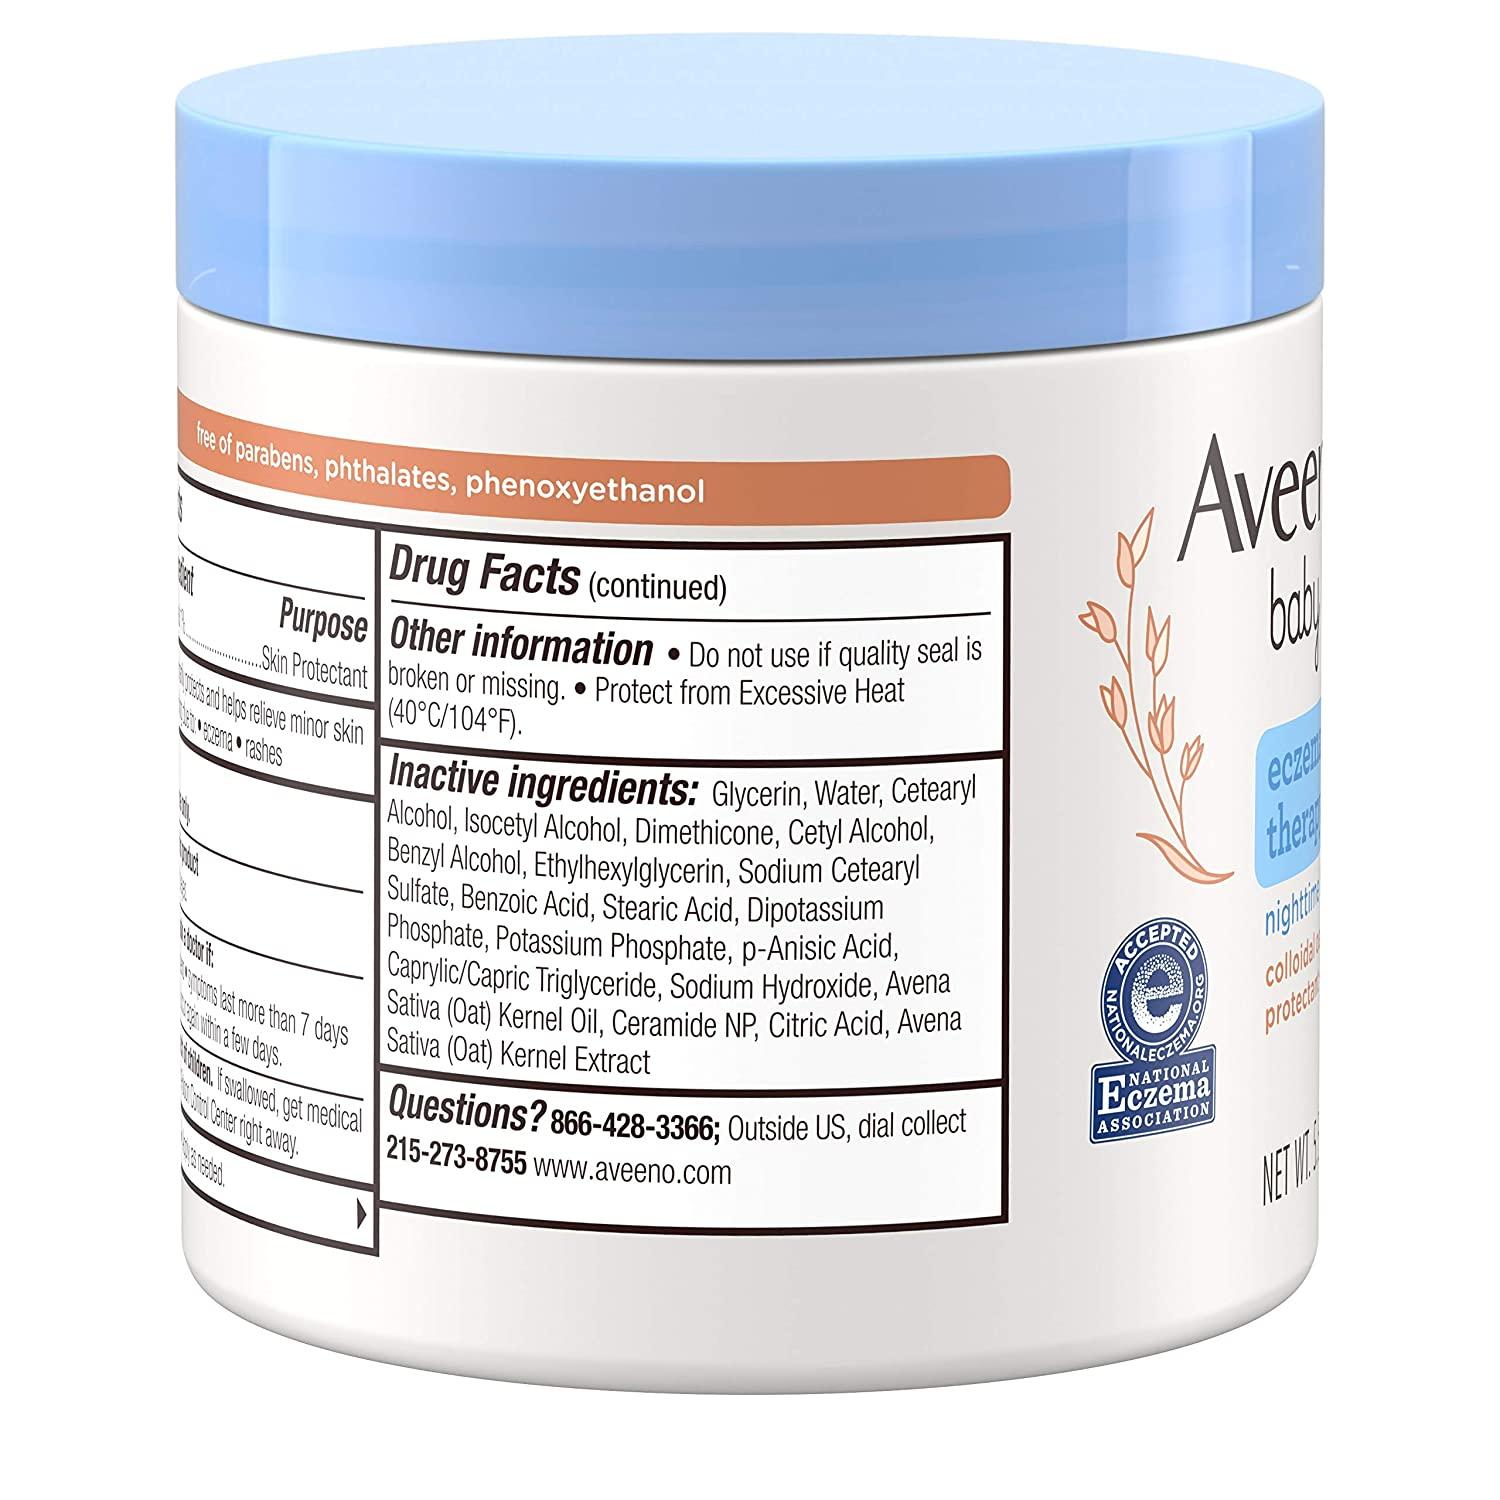 Aveeno Baby Eczema Therapy Moisturizing Cream For Dry, Itchy Skin -7.3oz :  Target